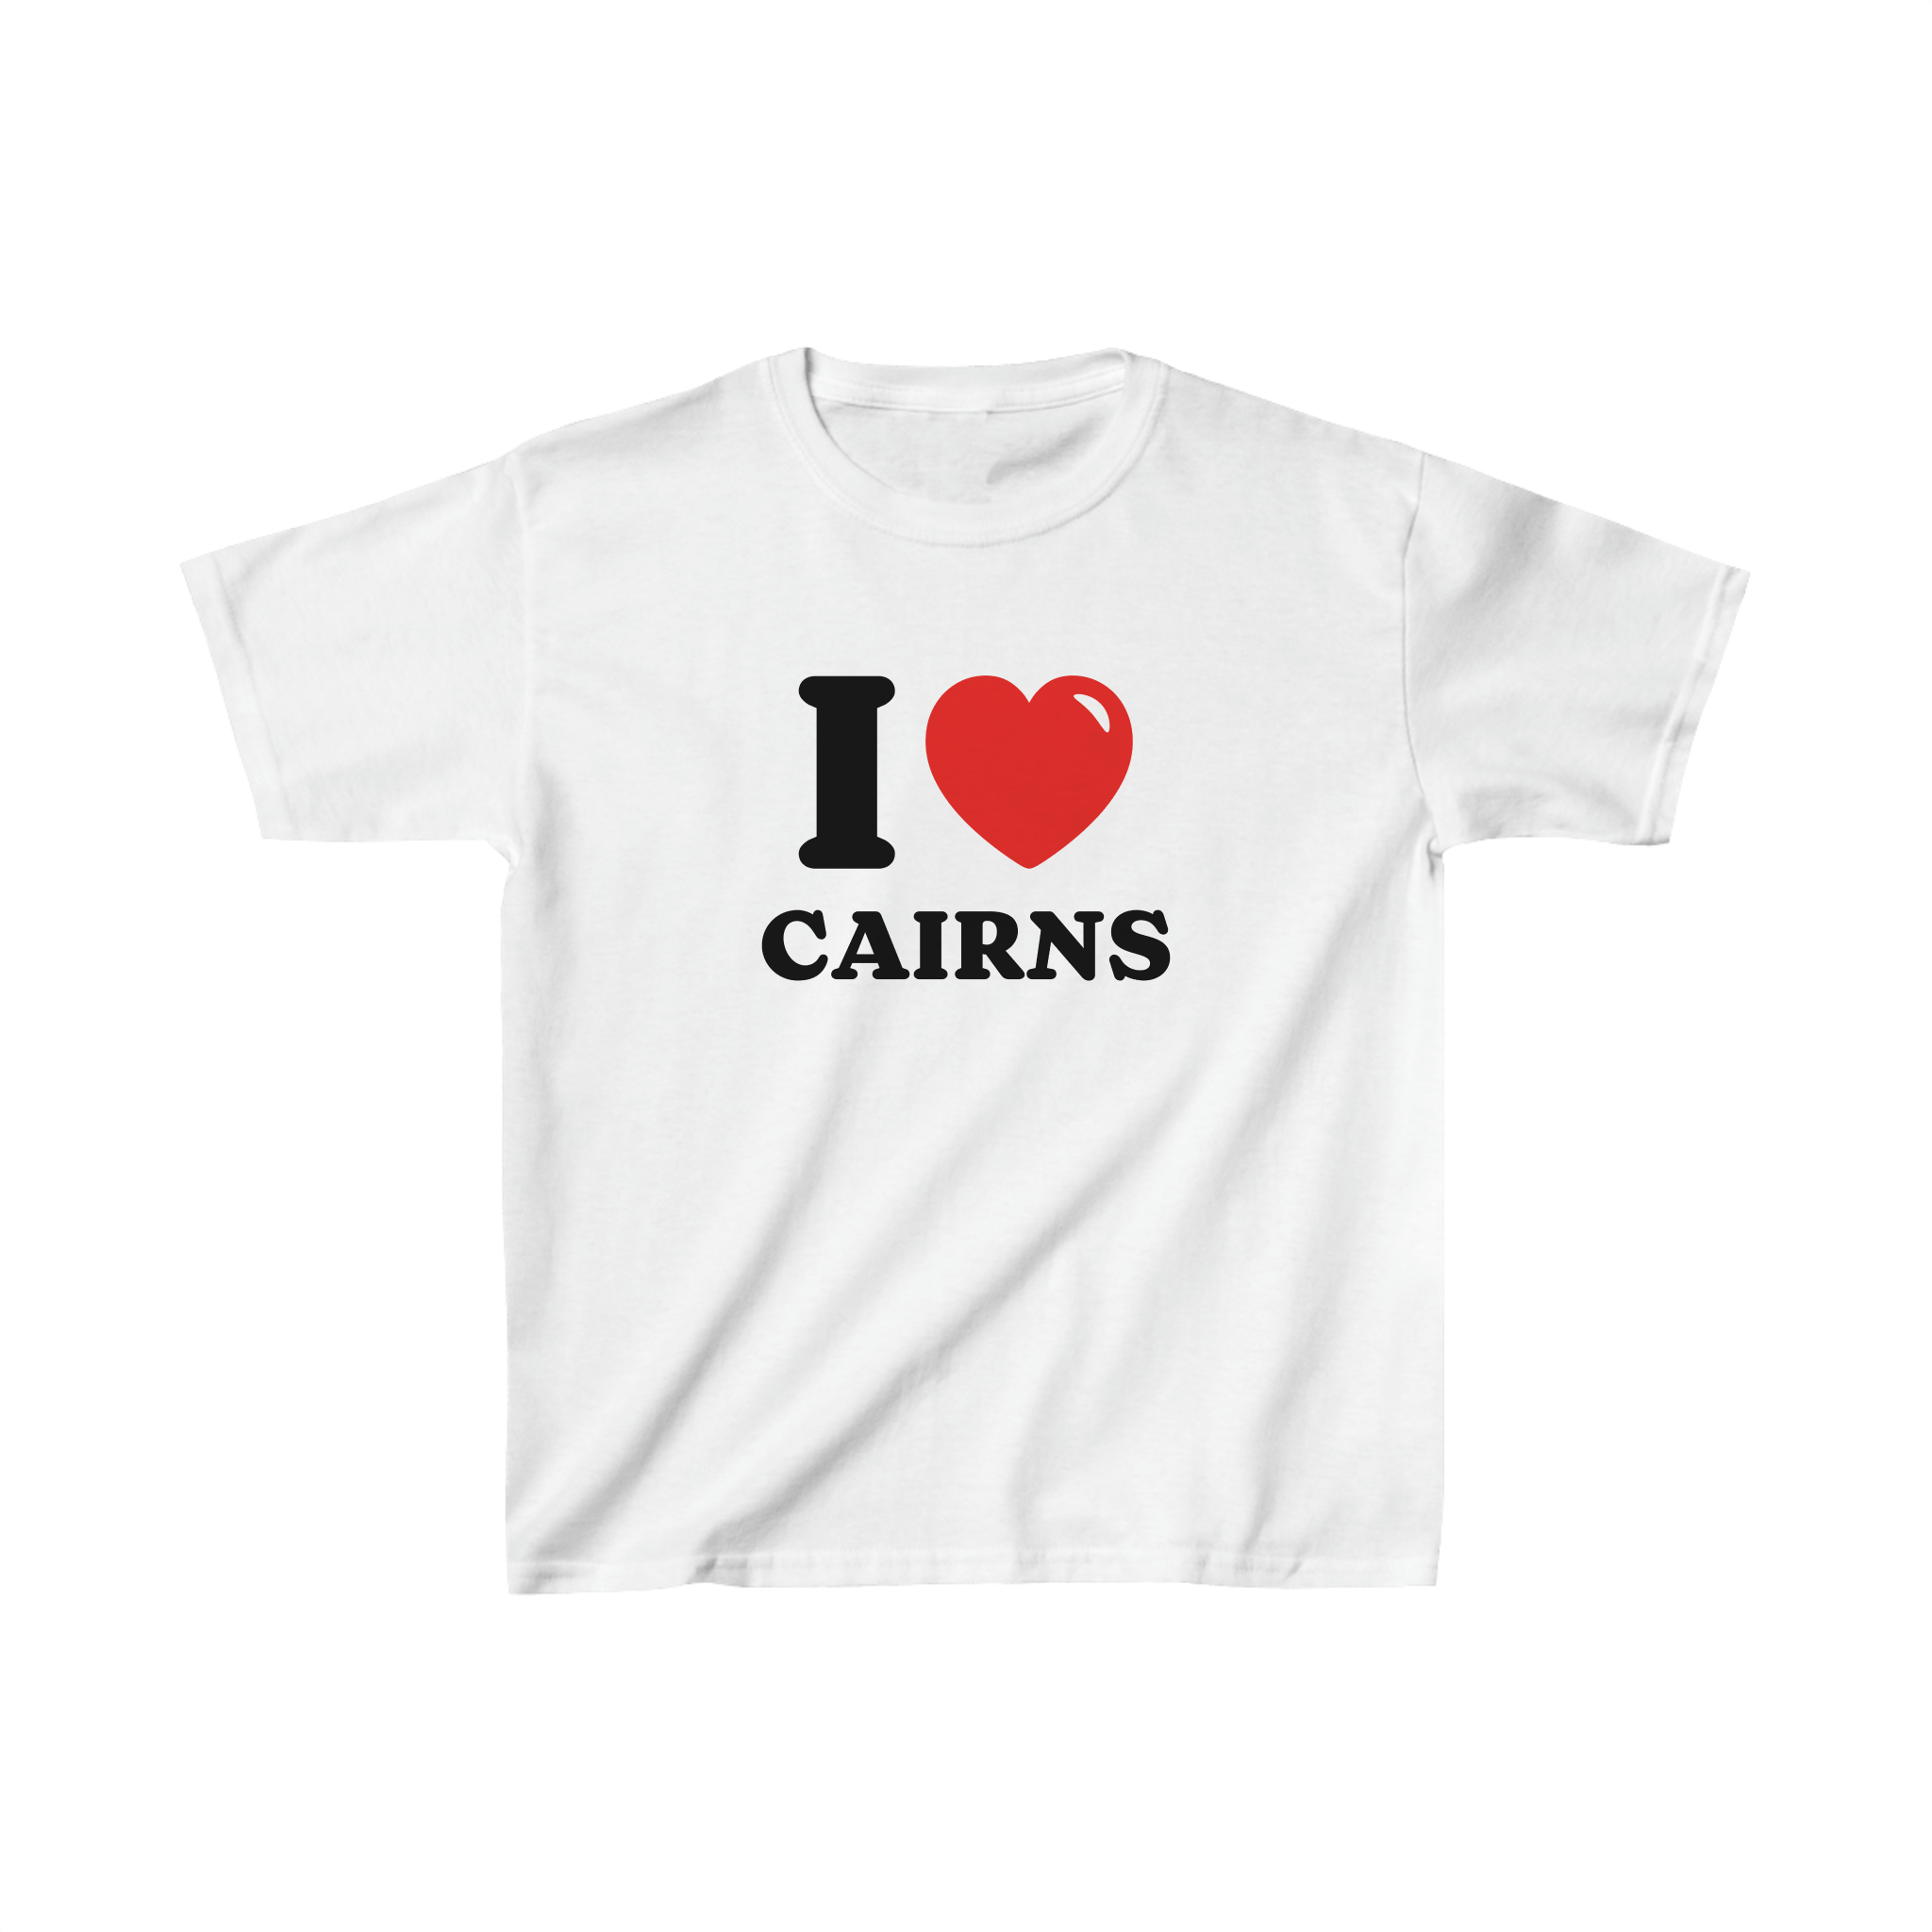 'I love Cairns' baby tee